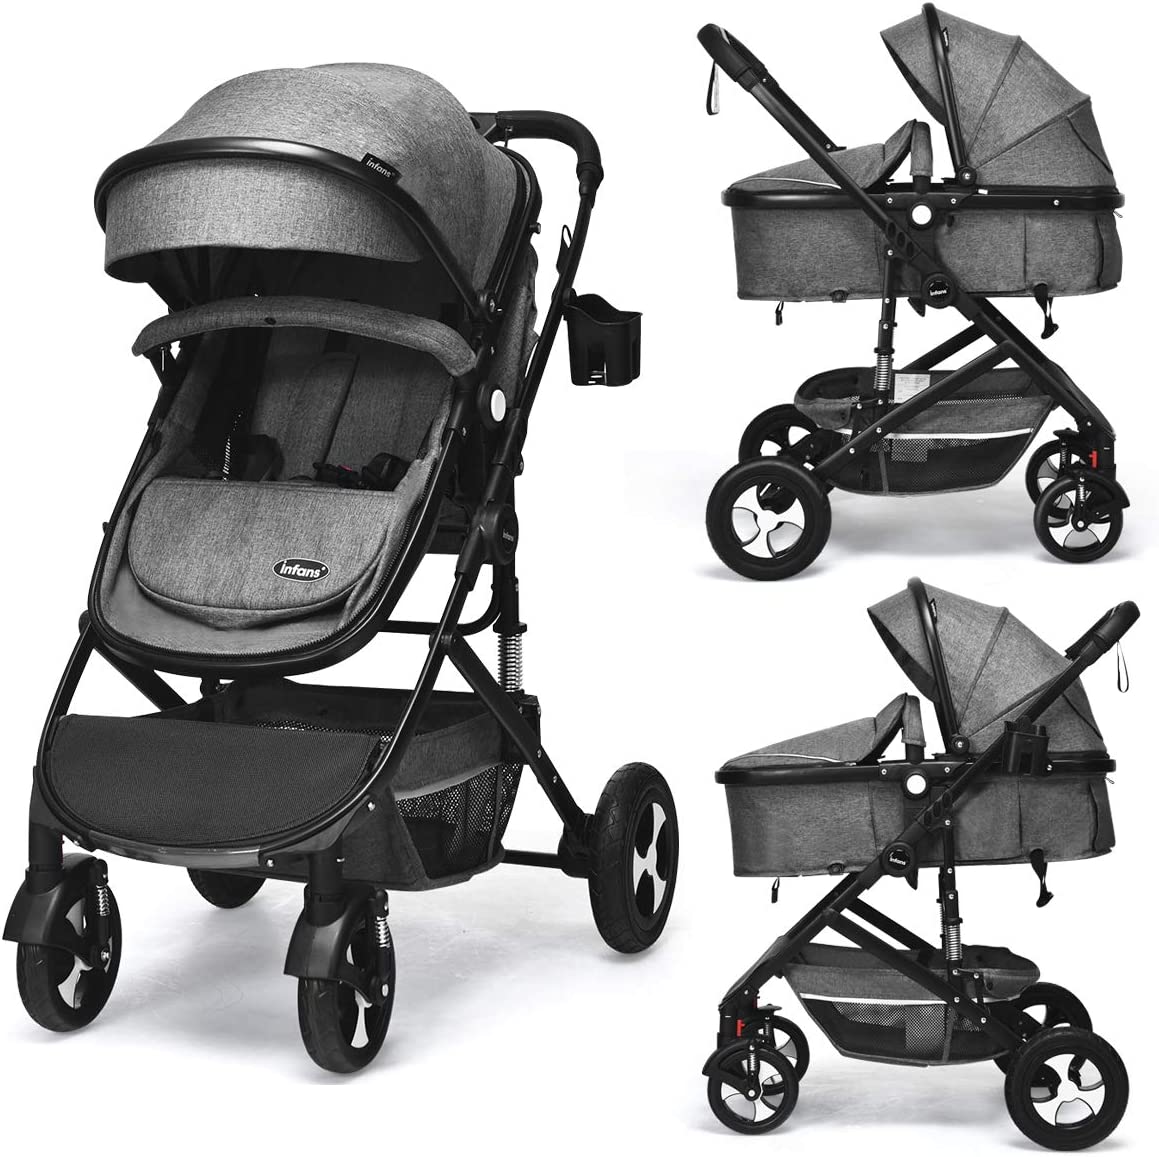 INFANS Baby Stroller for Newborn, 2 in 1 High Landscape Convertible Reversible Bassinet Pram for Infant & Toddler, Foldable Aluminum Alloy Pushchair with Adjustable Backrest, 3D Suspension (Grey)